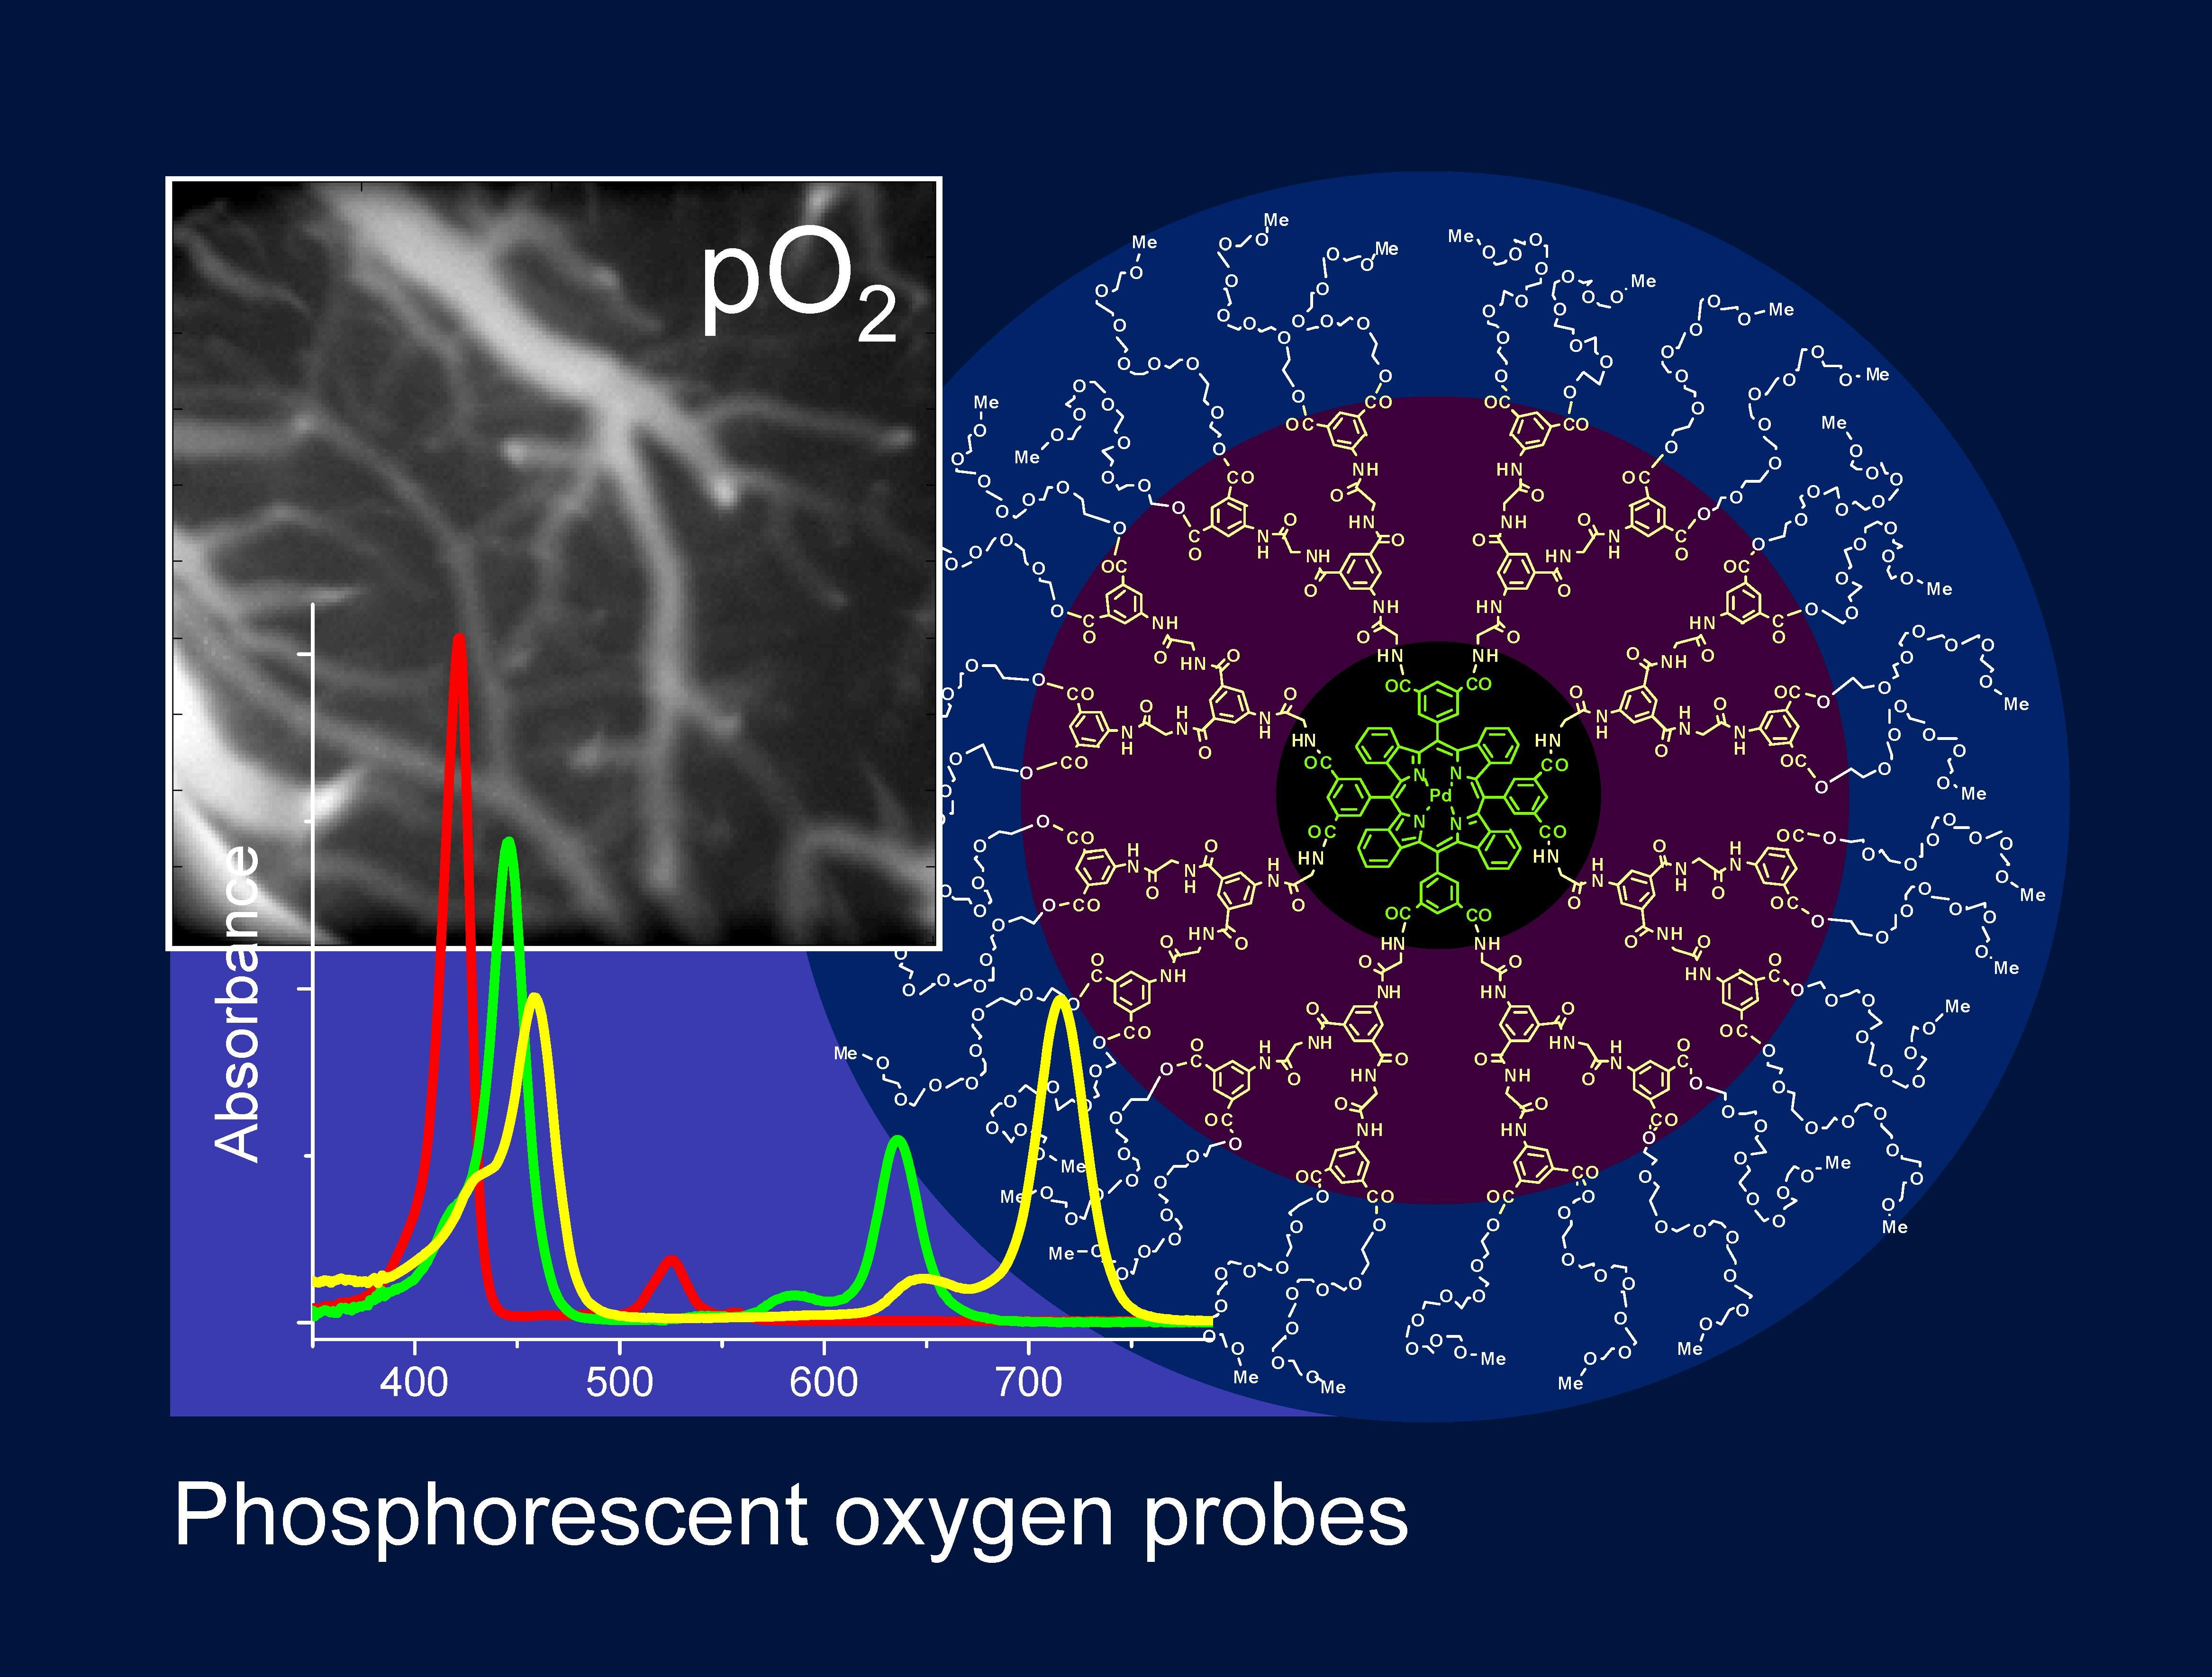 Phosphorescent probes for oxygen